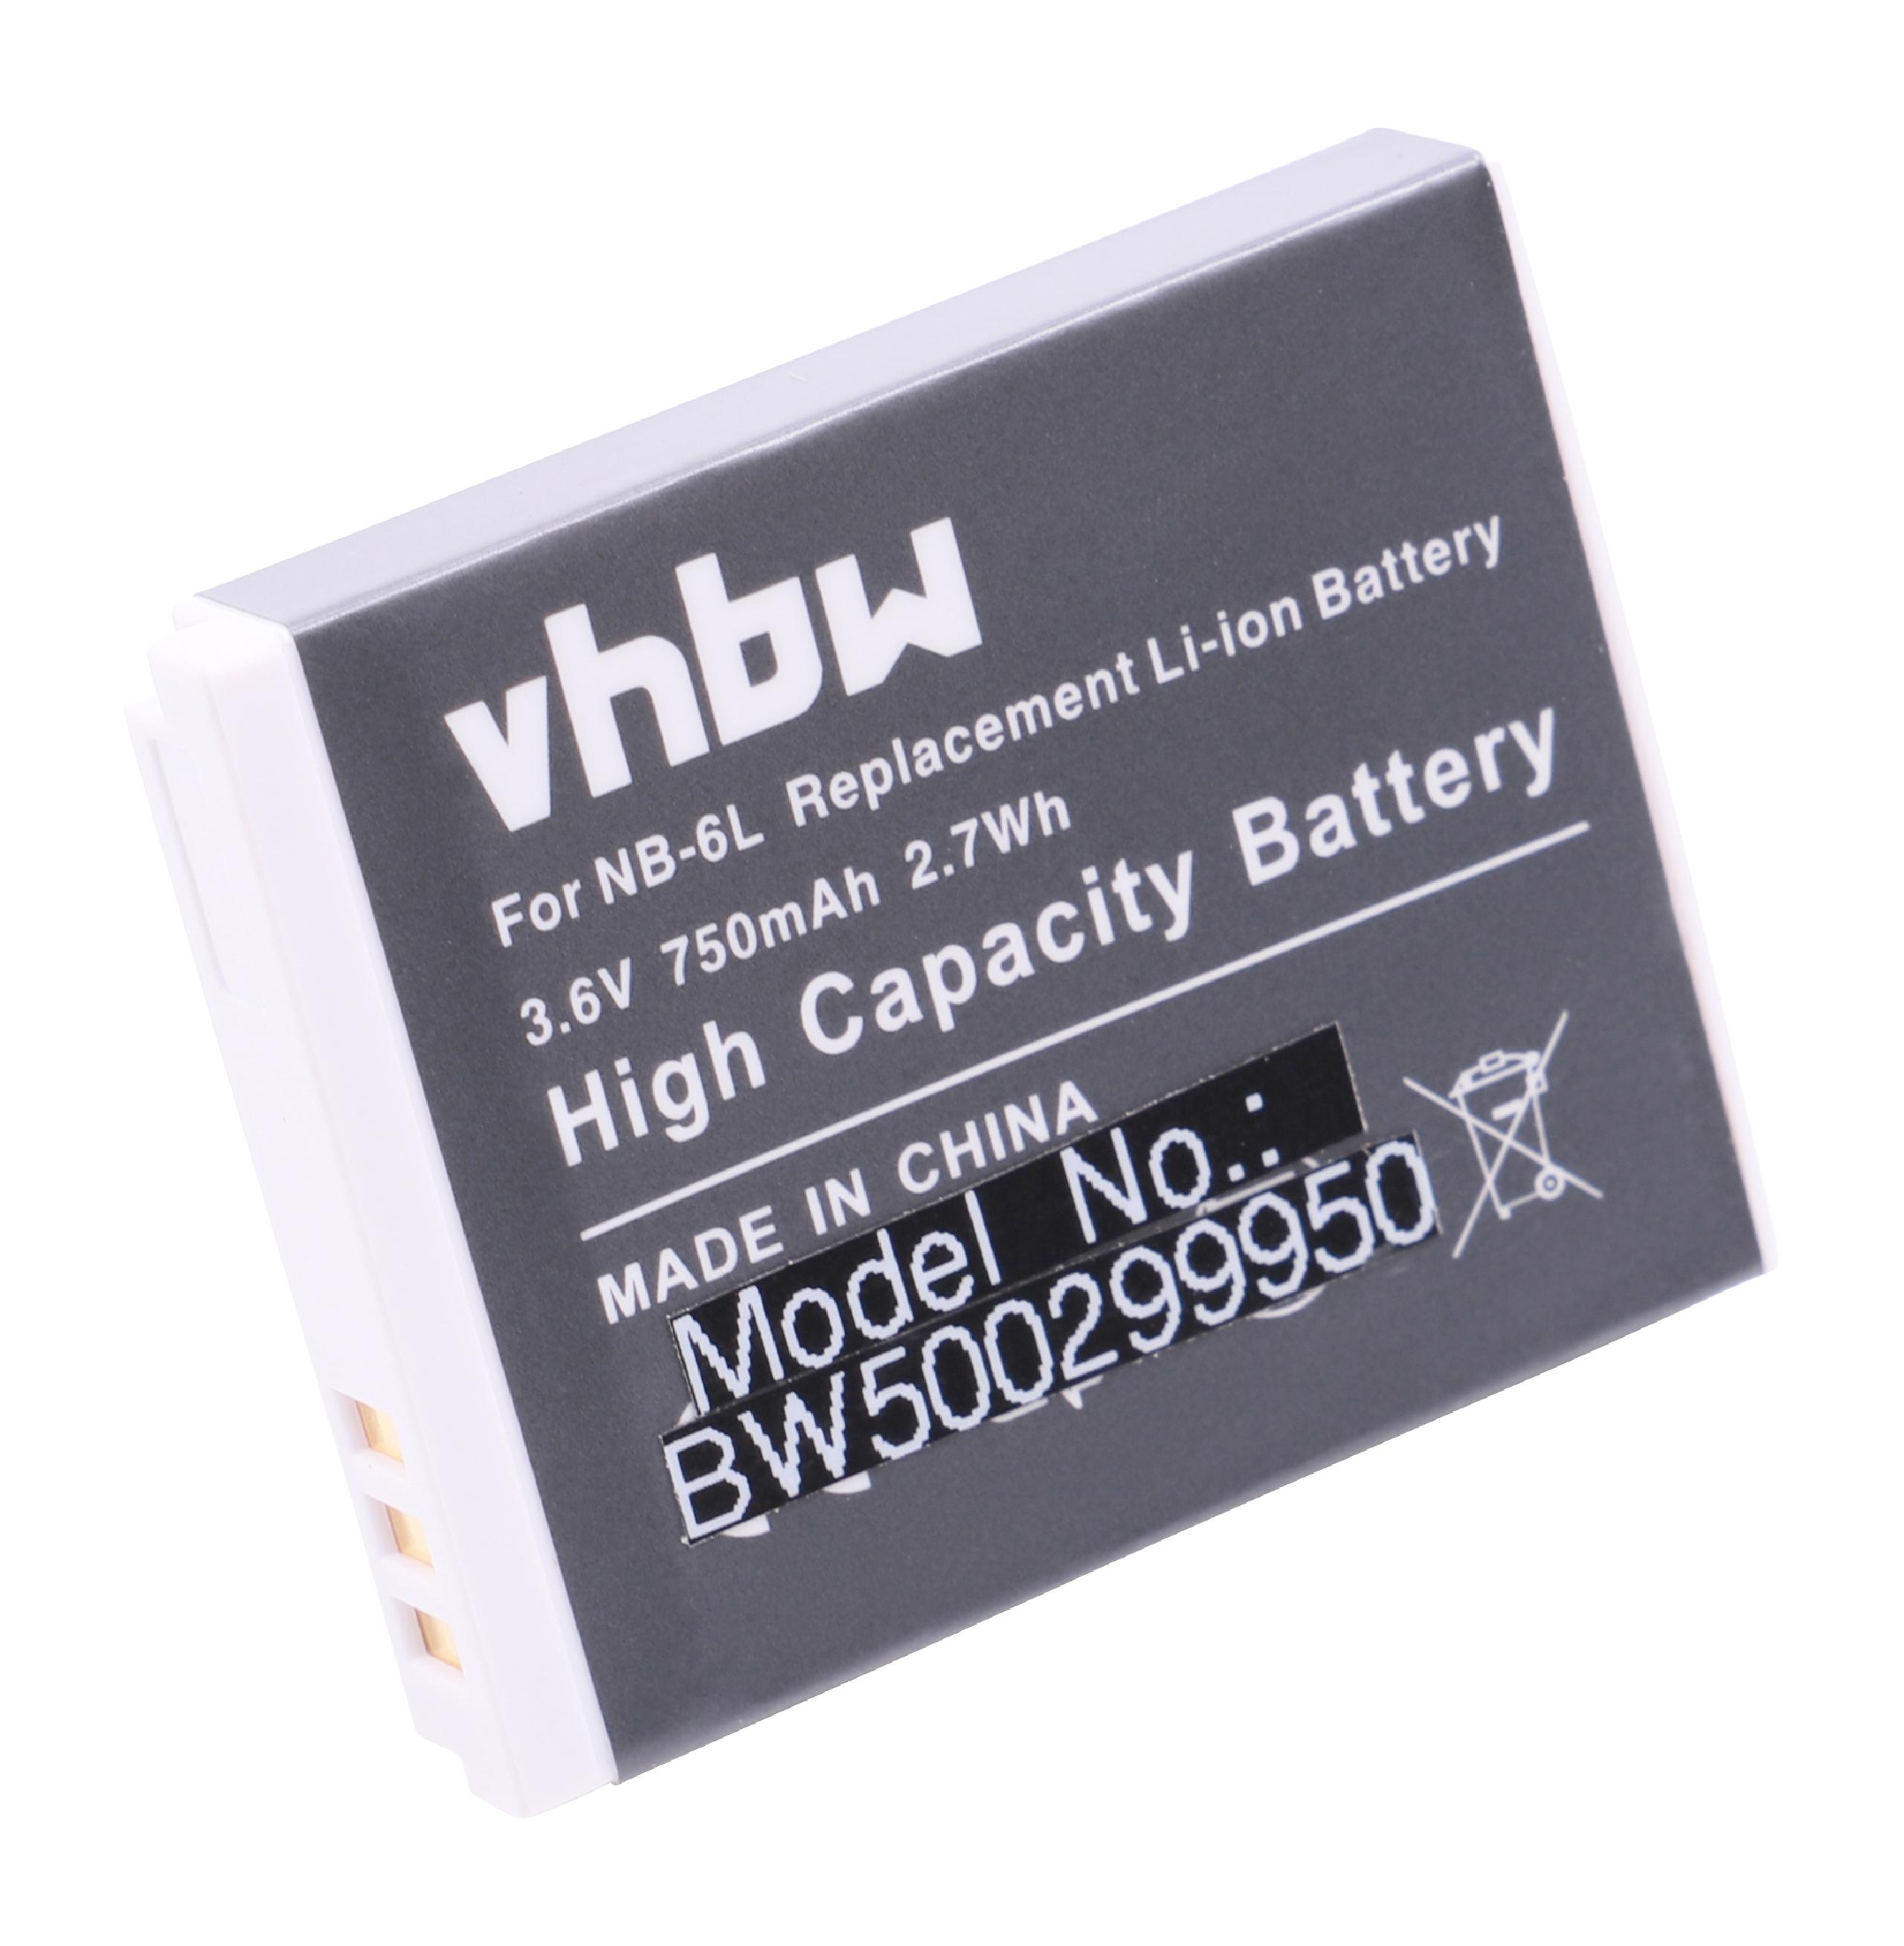 Batteria sostituisce Canon NB-6L, NB-6LH per fotocamera Canon - 750mAh 3,6V Li-Ion